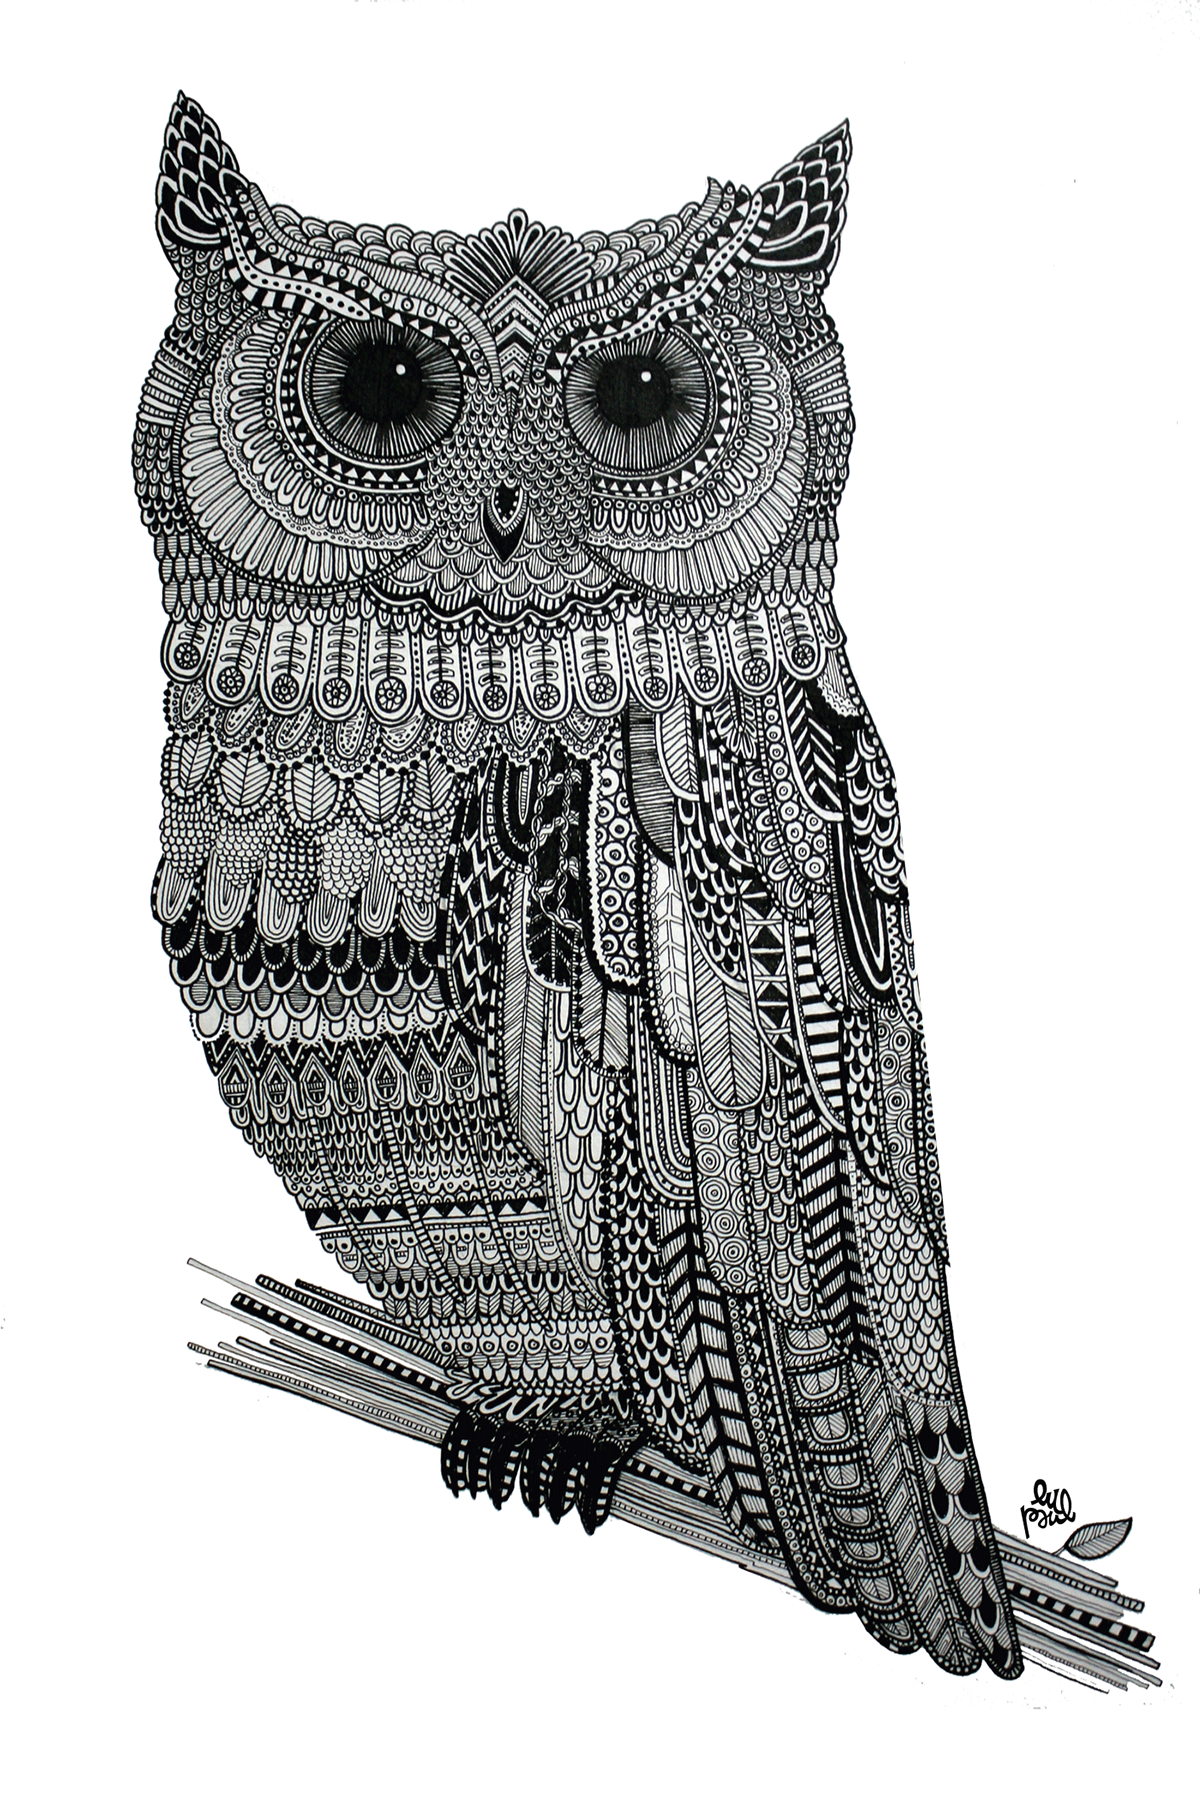 Owl Illustration 2.0 on Behance